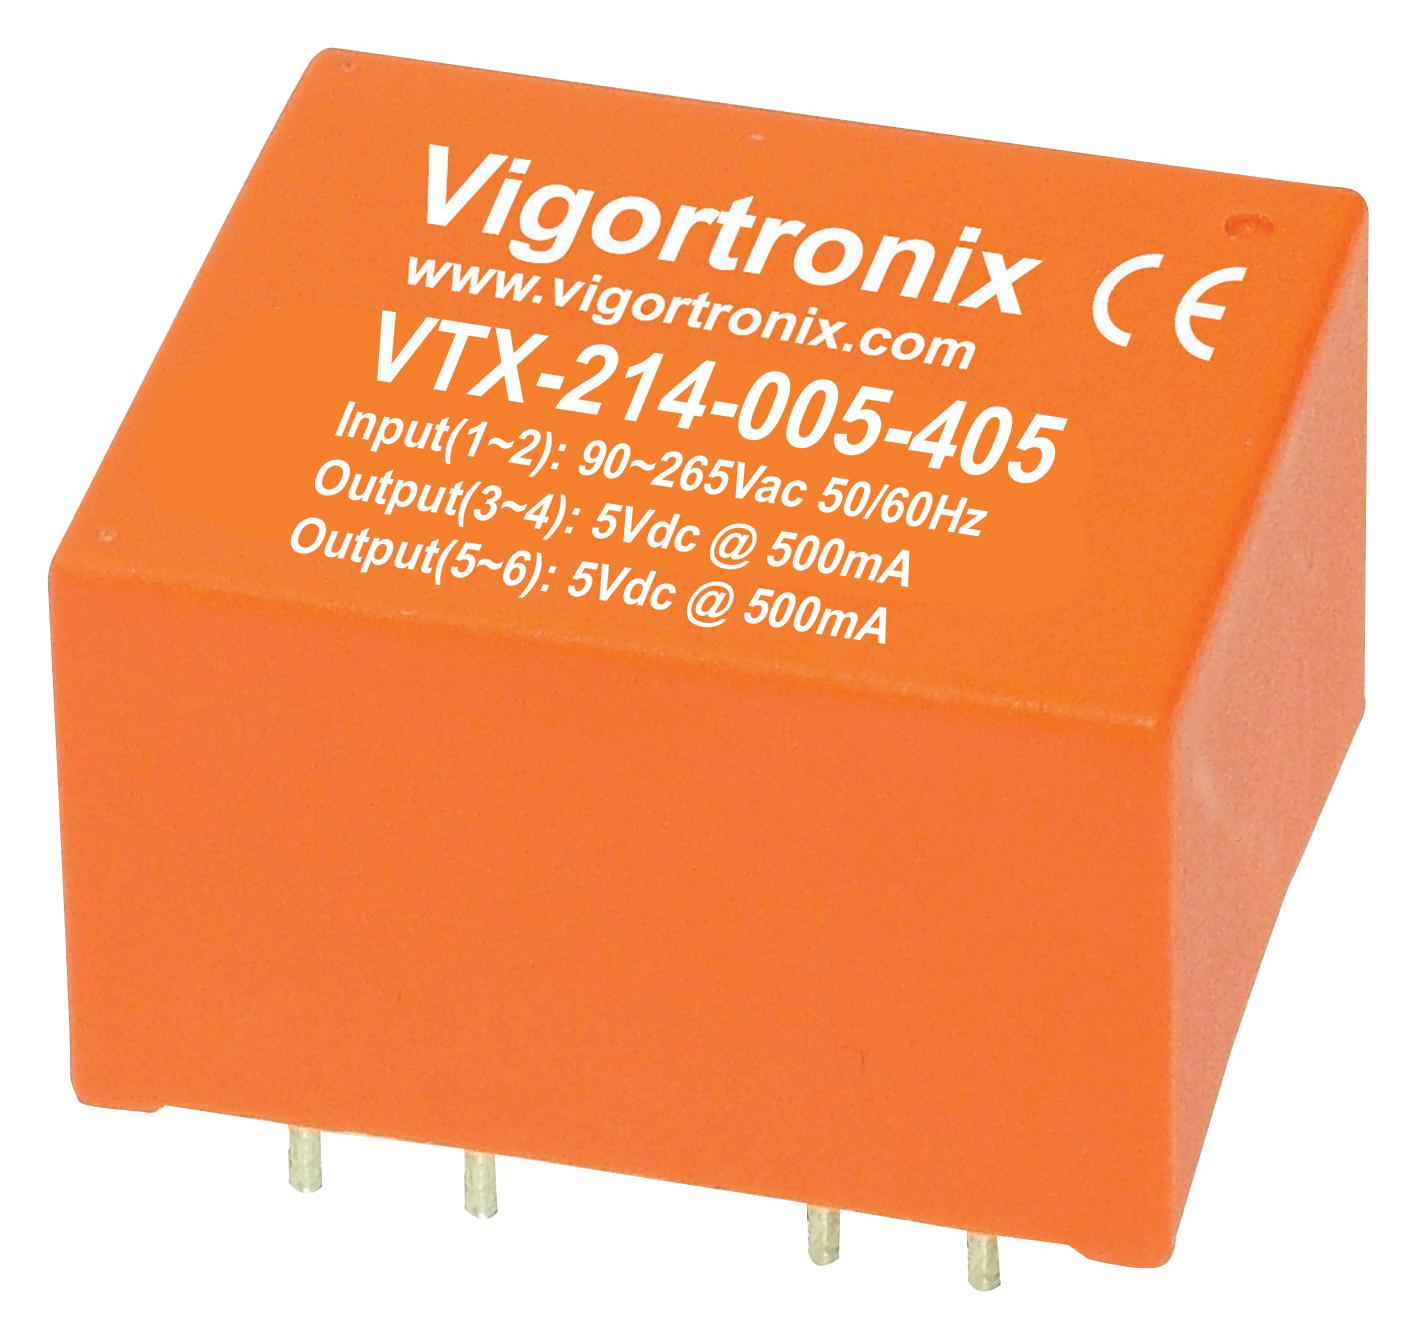 VTX-214-005-0324 POWER SUPPLY, AC-DC, 3.3V, 0.757A VIGORTRONIX